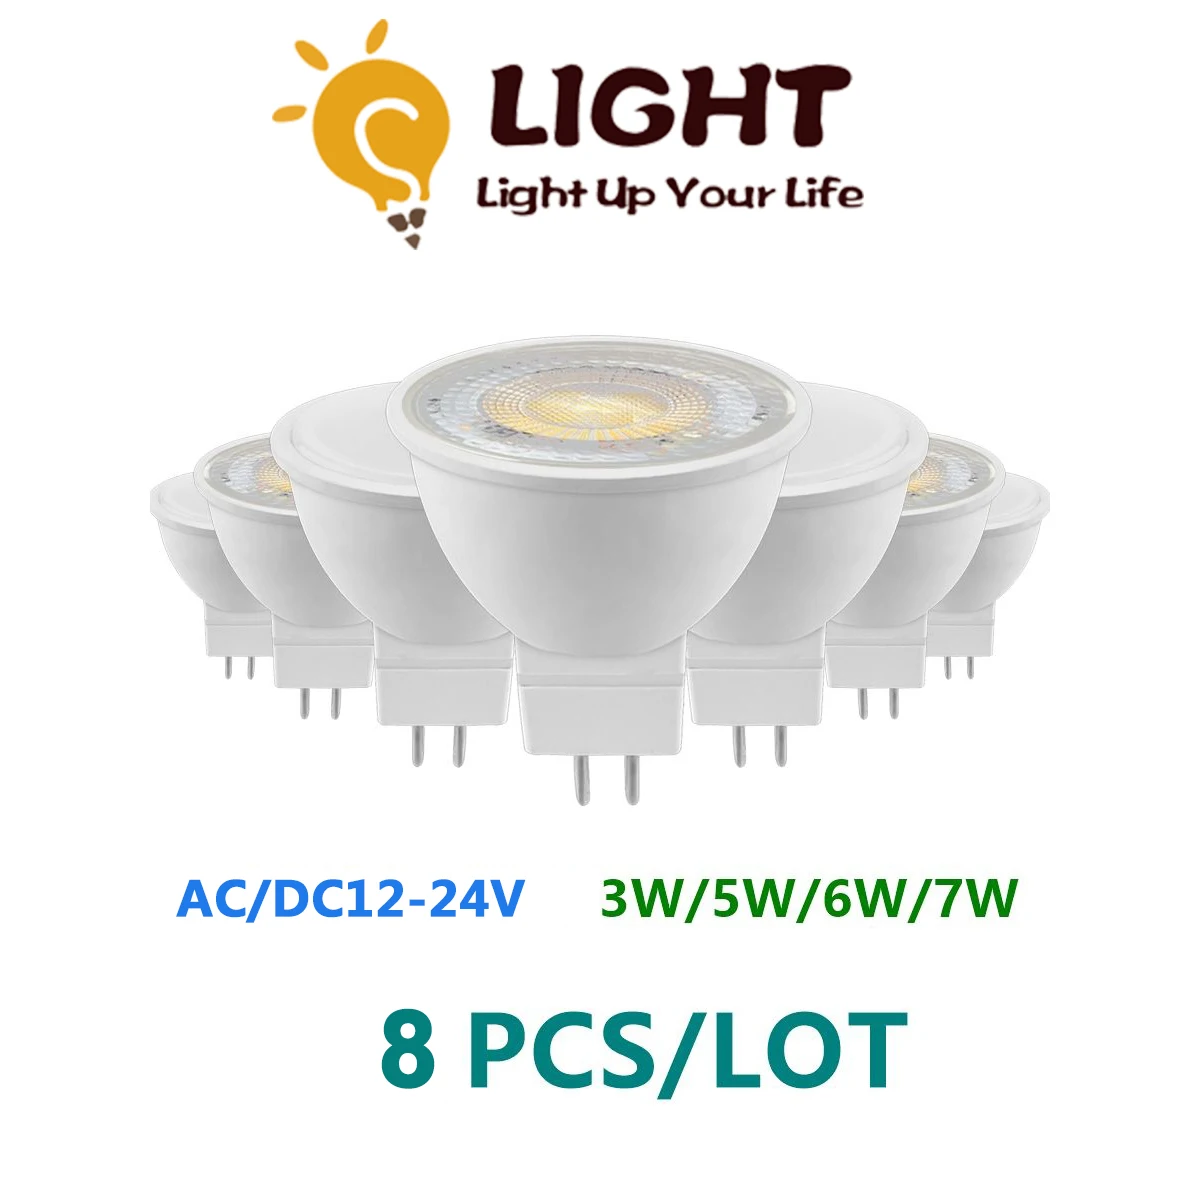 8PCS AC/DC12V-24V Spot Foco MR16 3W-7W Warm White Day Light LED Light Lamp For Home Decoration Replace 50W Halogen Spotlight